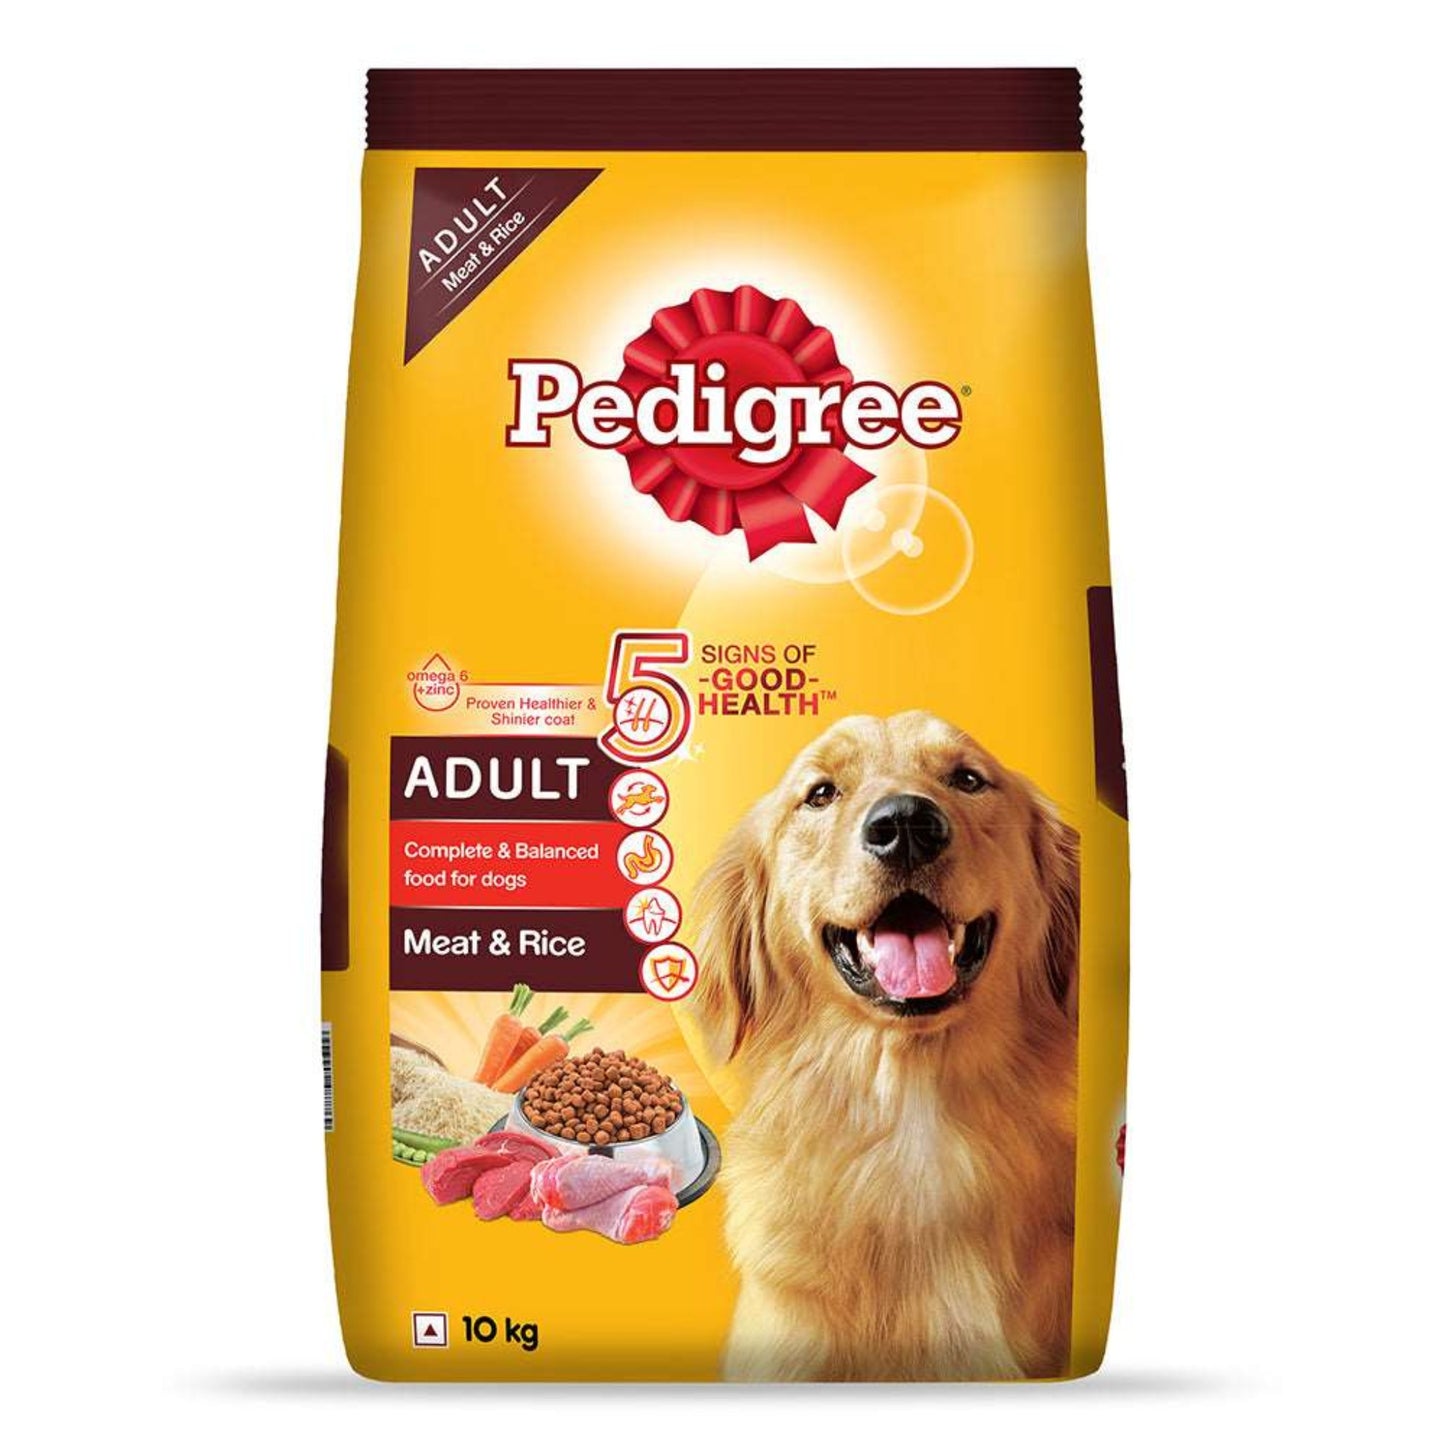 Pedigree Complete & Balanced Adult Dry Dog Food - Meat & Rice, 10Kg